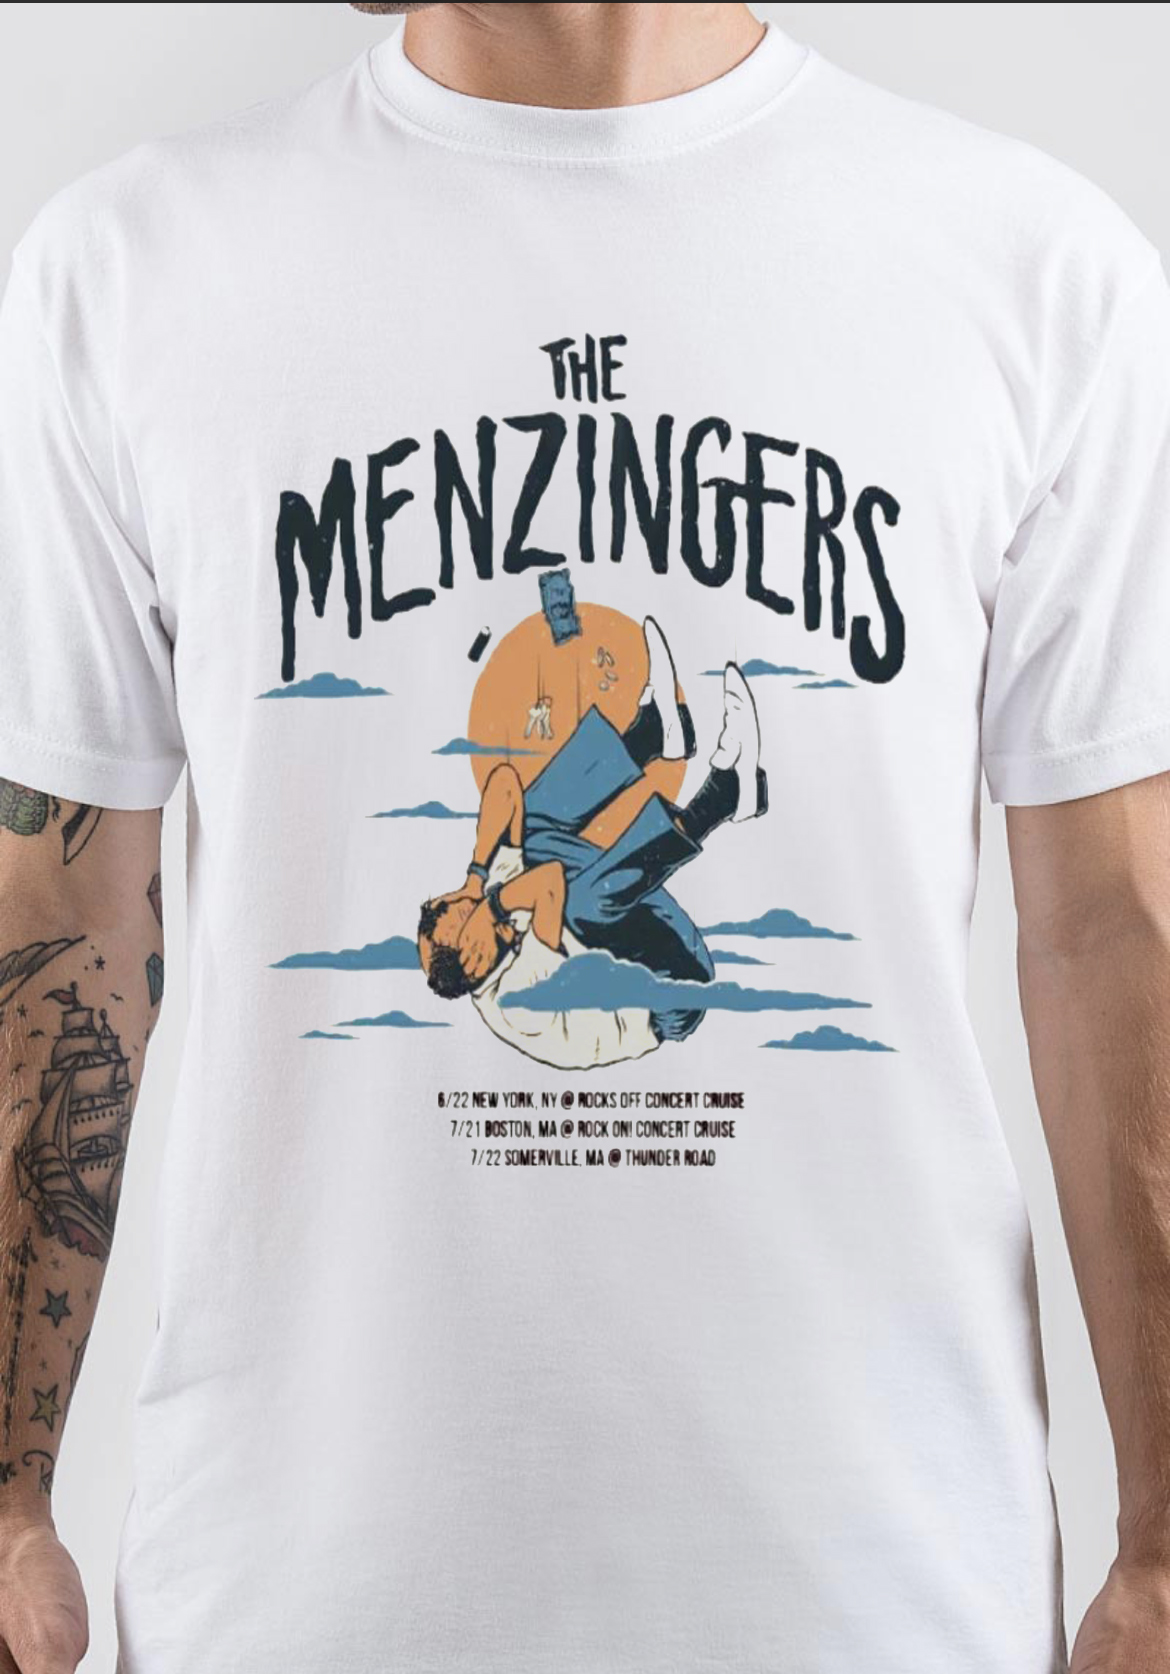 The Menzingers T-Shirt And Merchandise